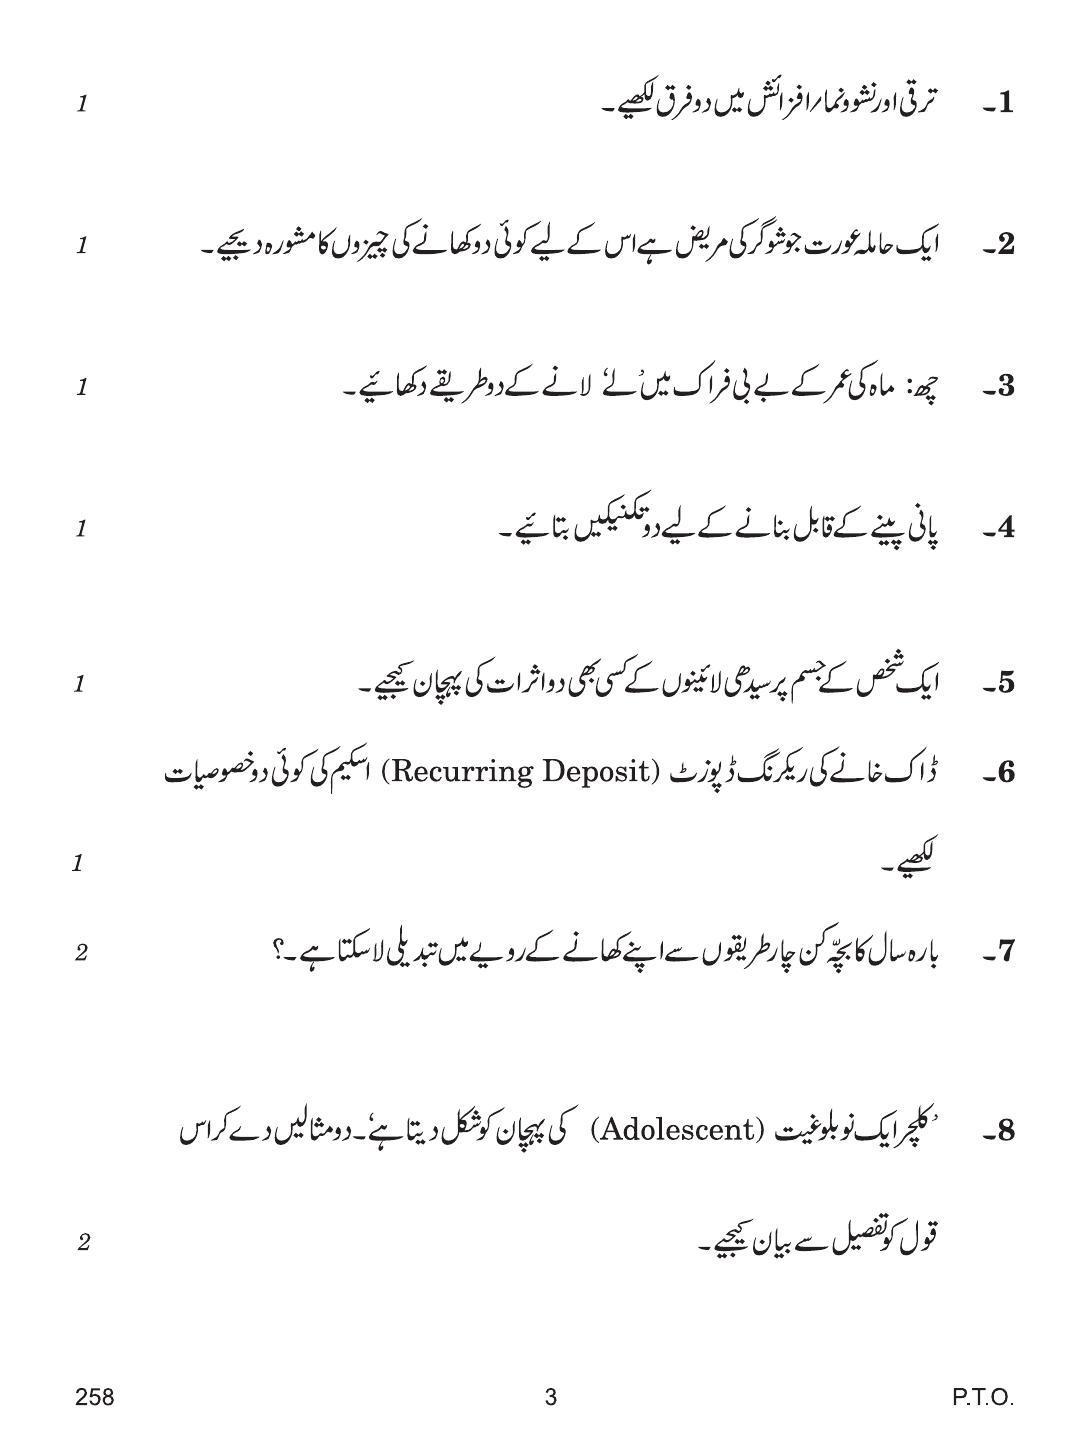 CBSE Class 12 258 (Home Science Urdu) 2018 Question Paper - Page 3